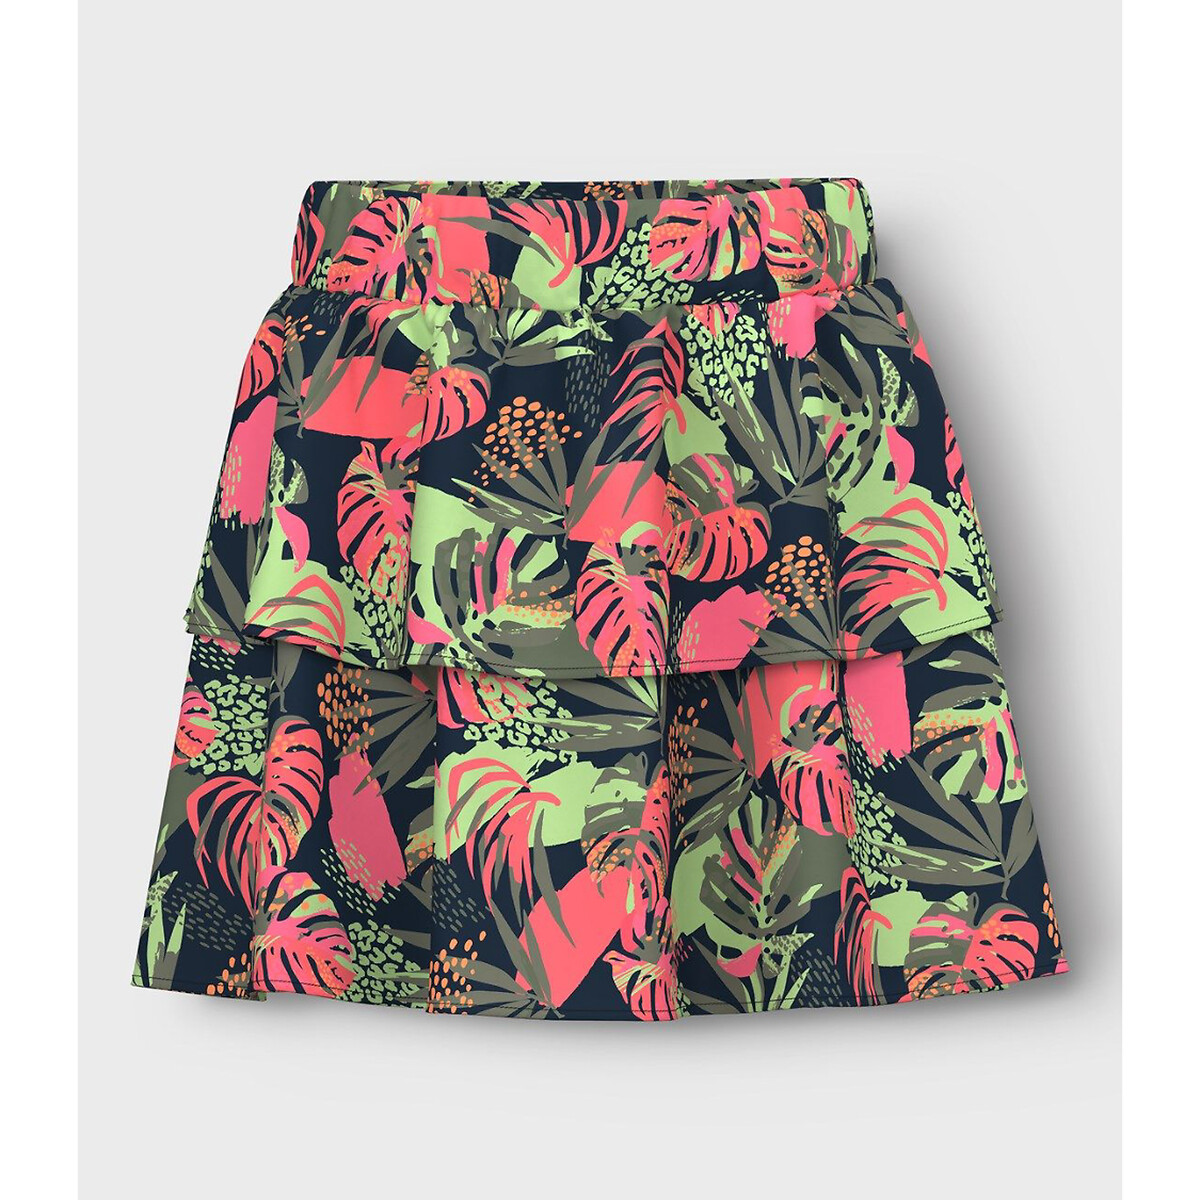 Image of Printed Mini Skirt